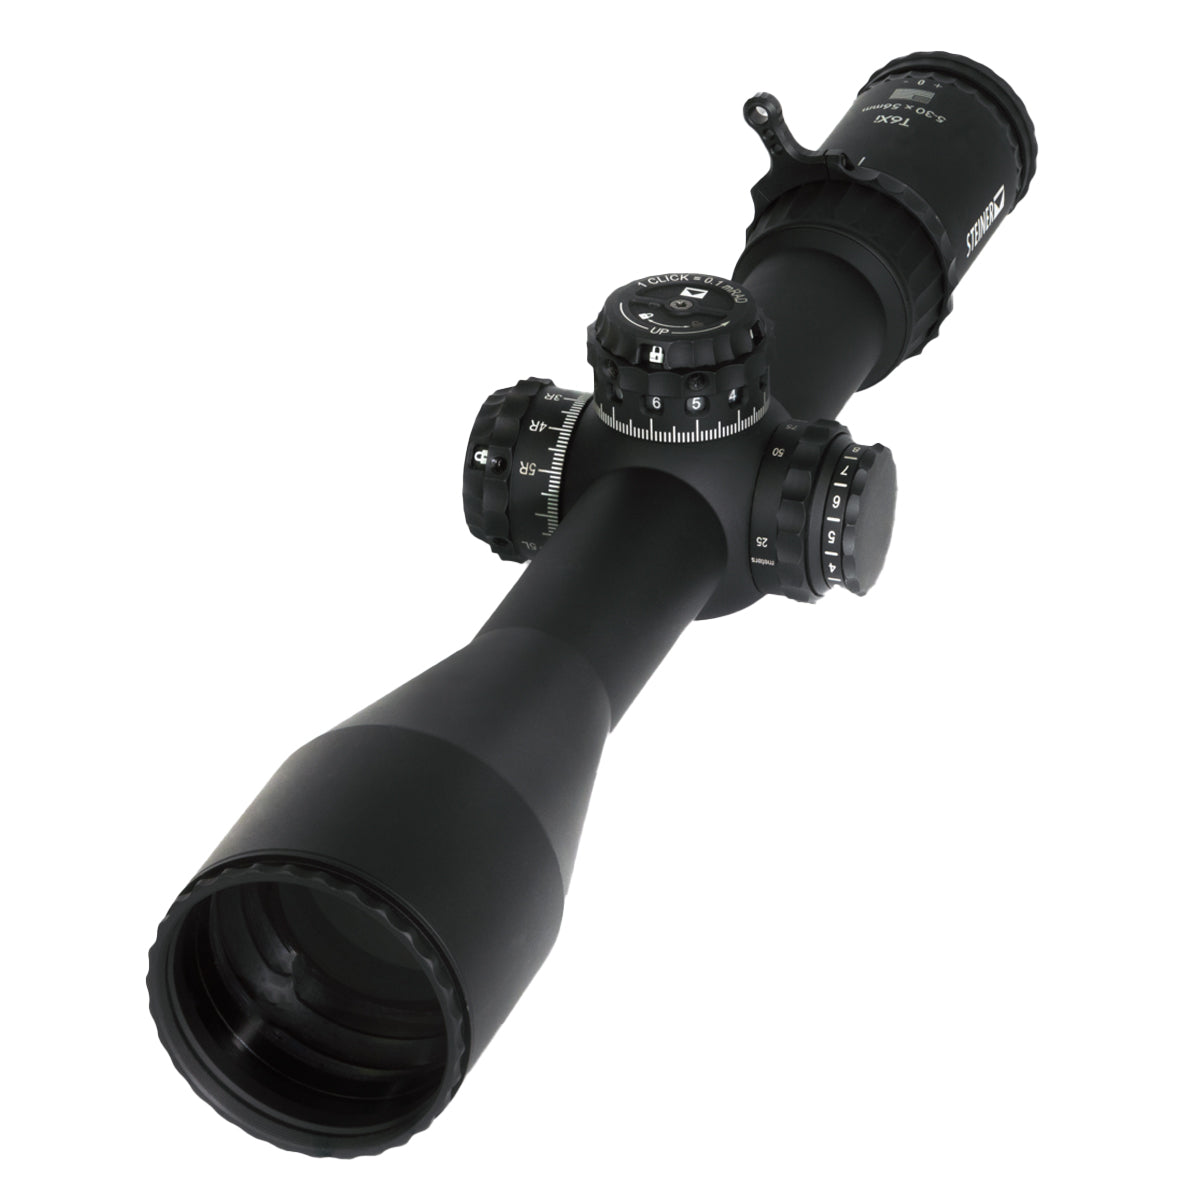 Steiner Optics T6Xi 5-30x56mm SCR2 Riflescope in  by GOHUNT | Steiner Optics - GOHUNT Shop